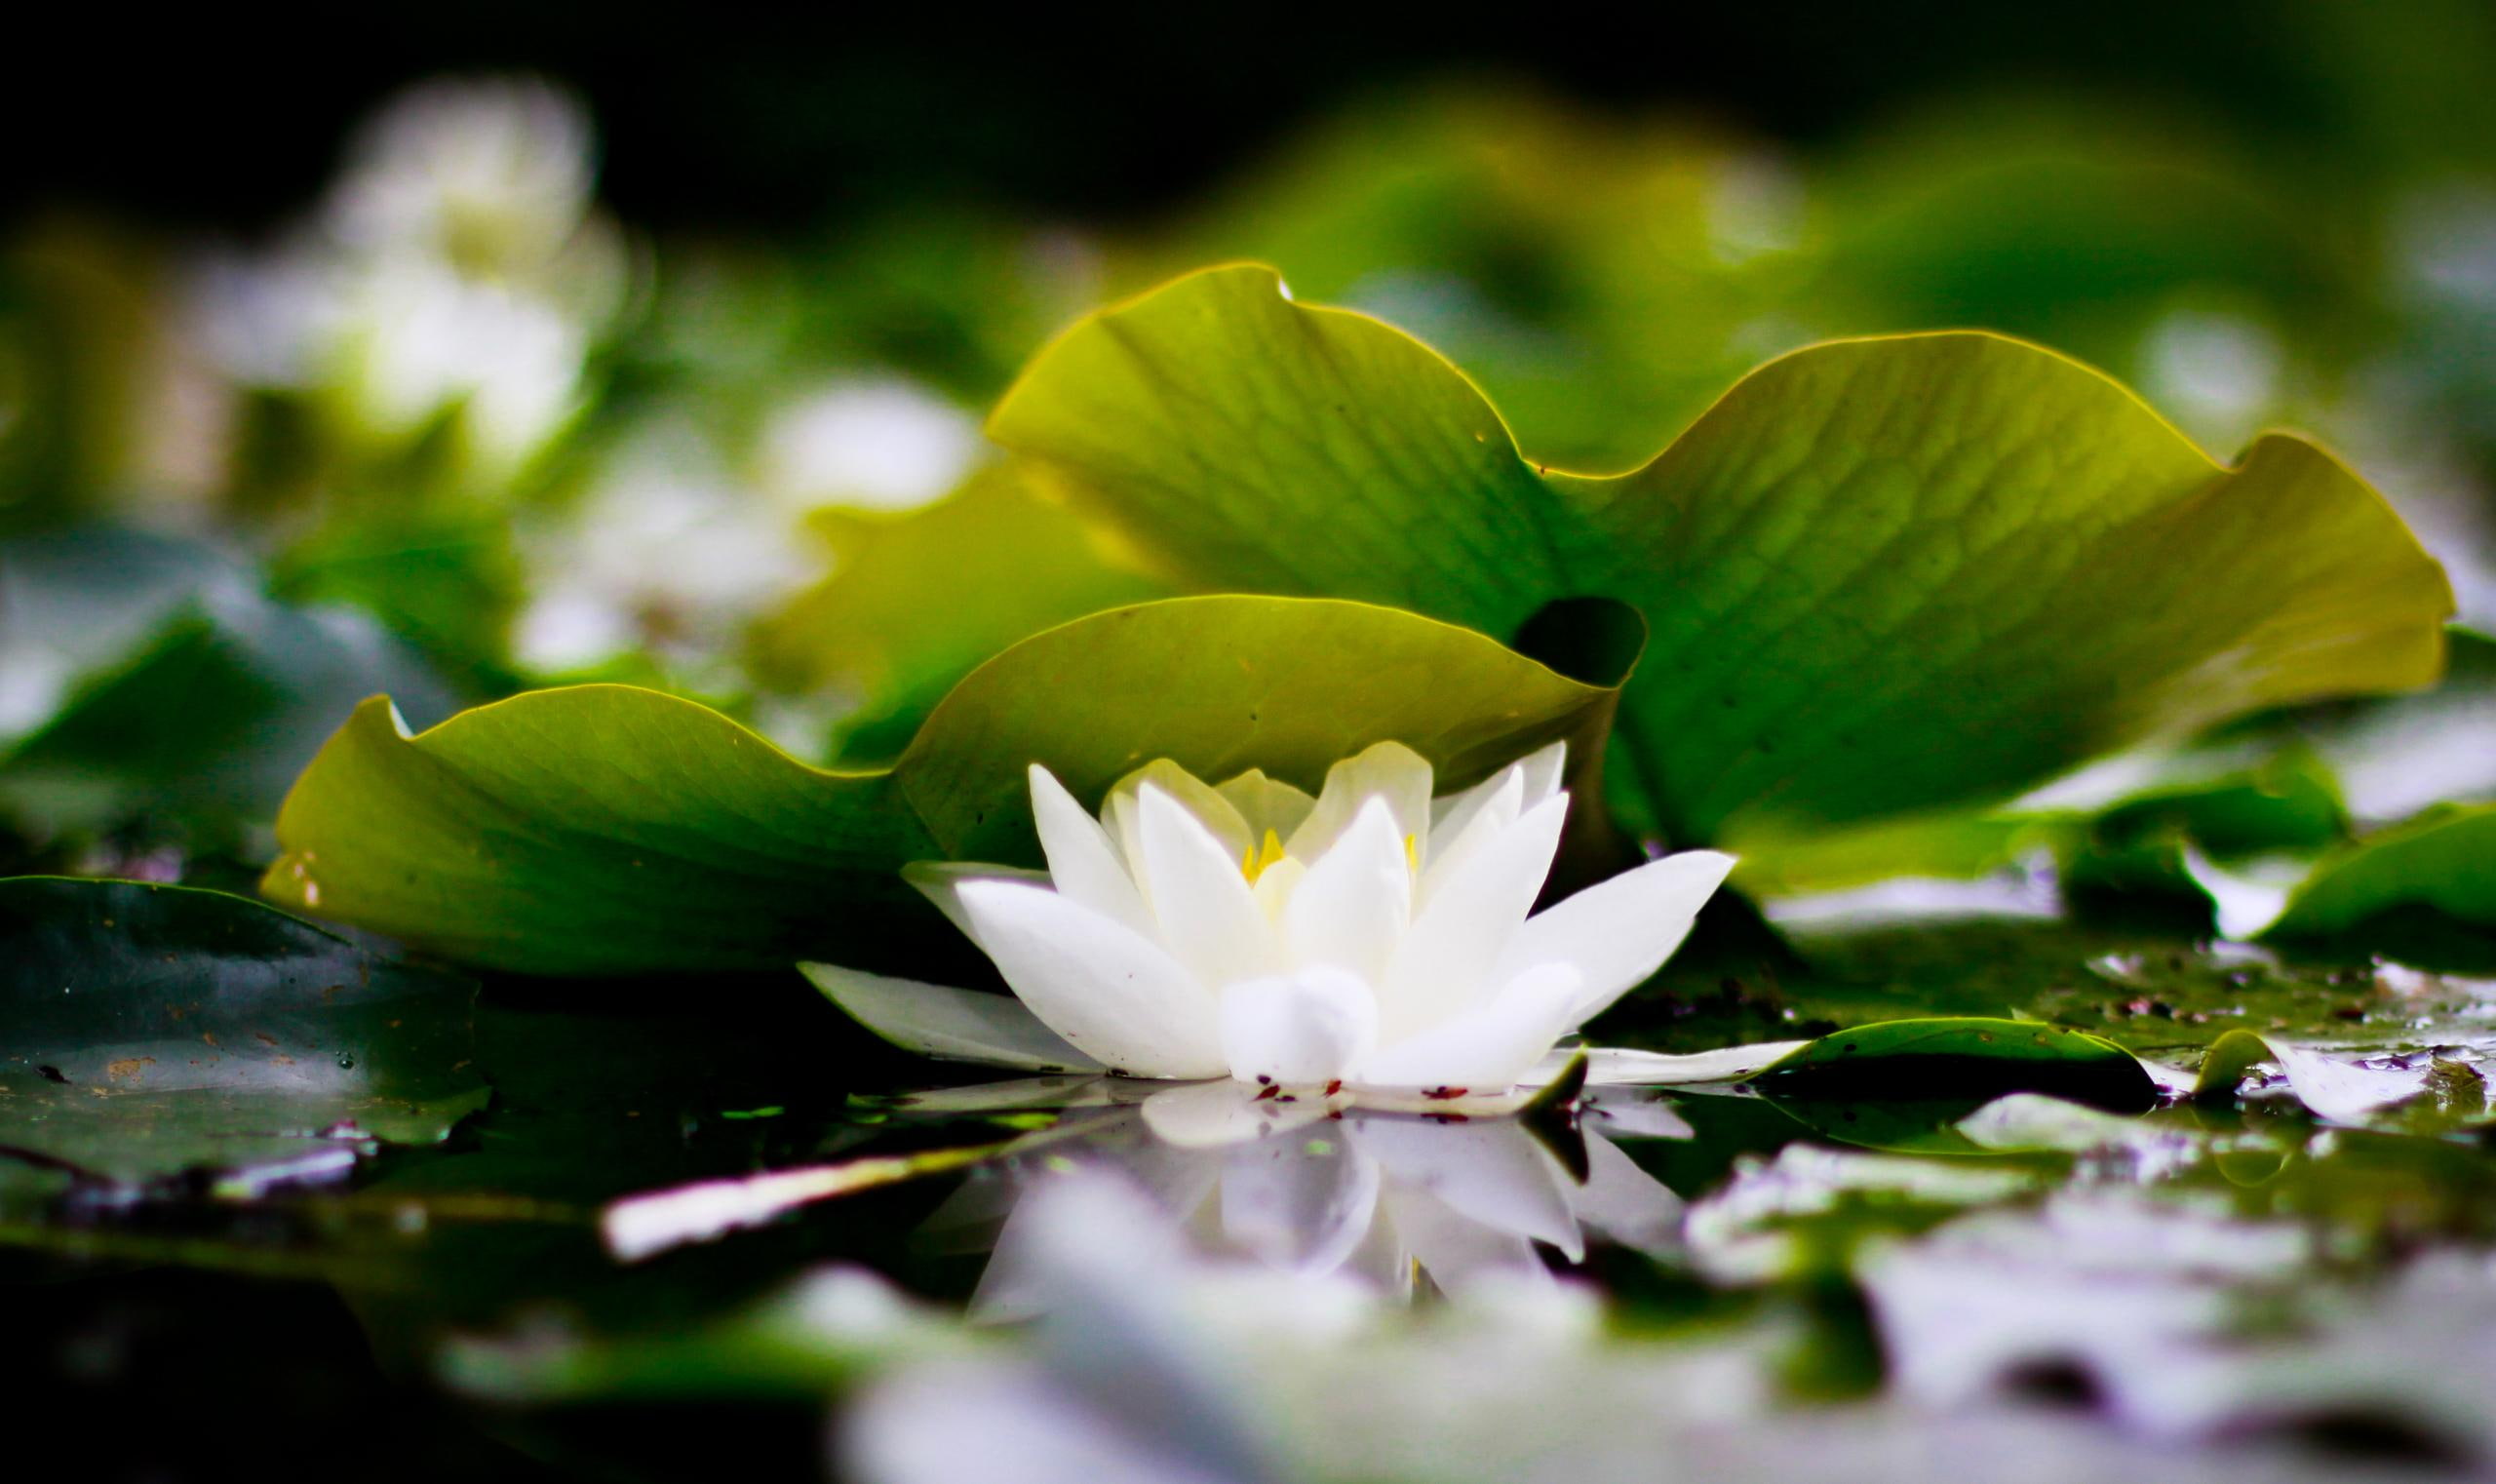 White Lotus, white lily flower, mazare alexandru, water lily